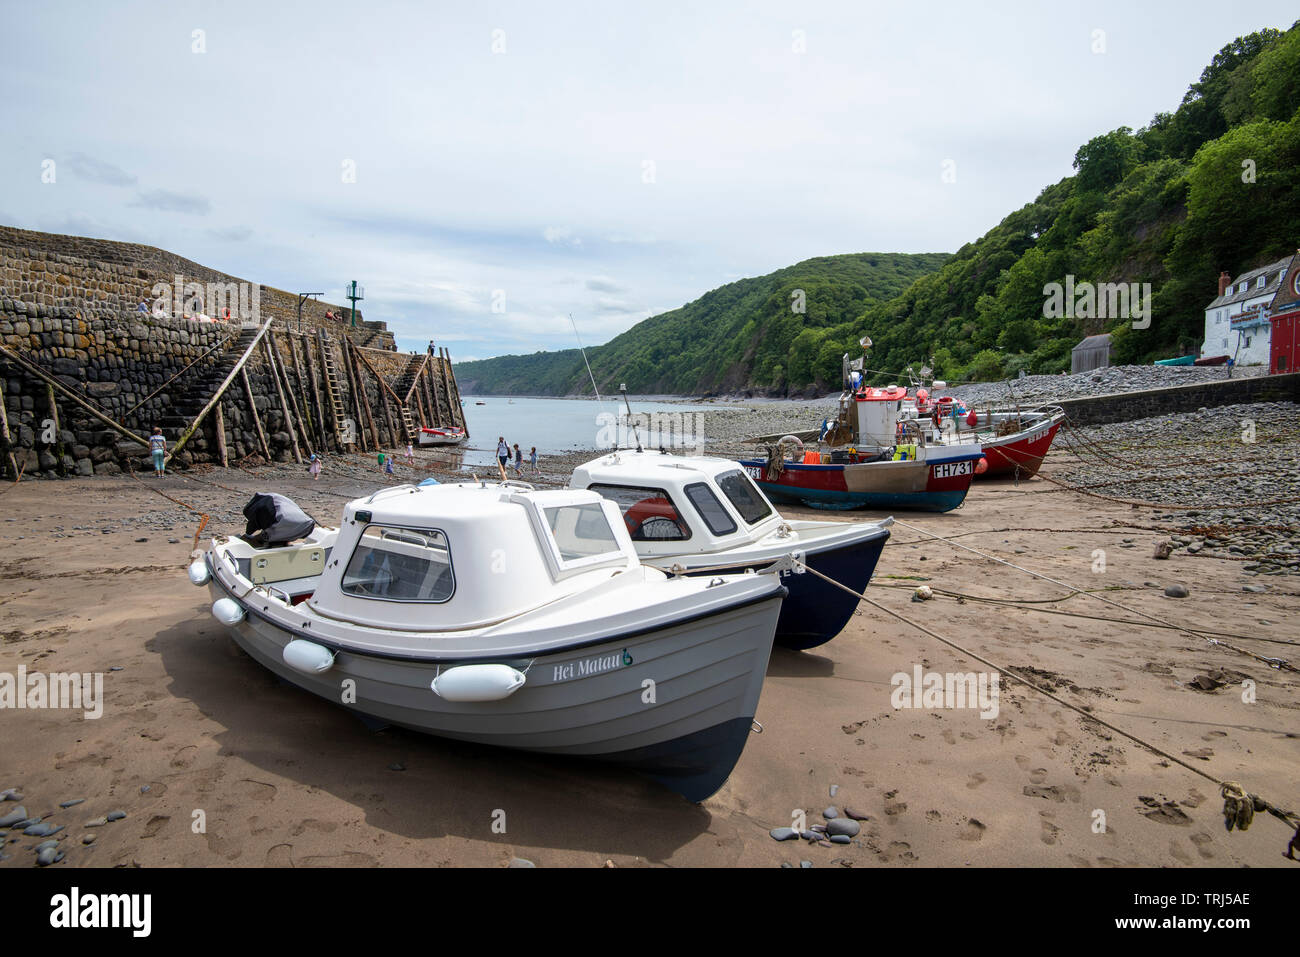 Boats on the Beach at Clovelly, Devon England UK Stock Photo